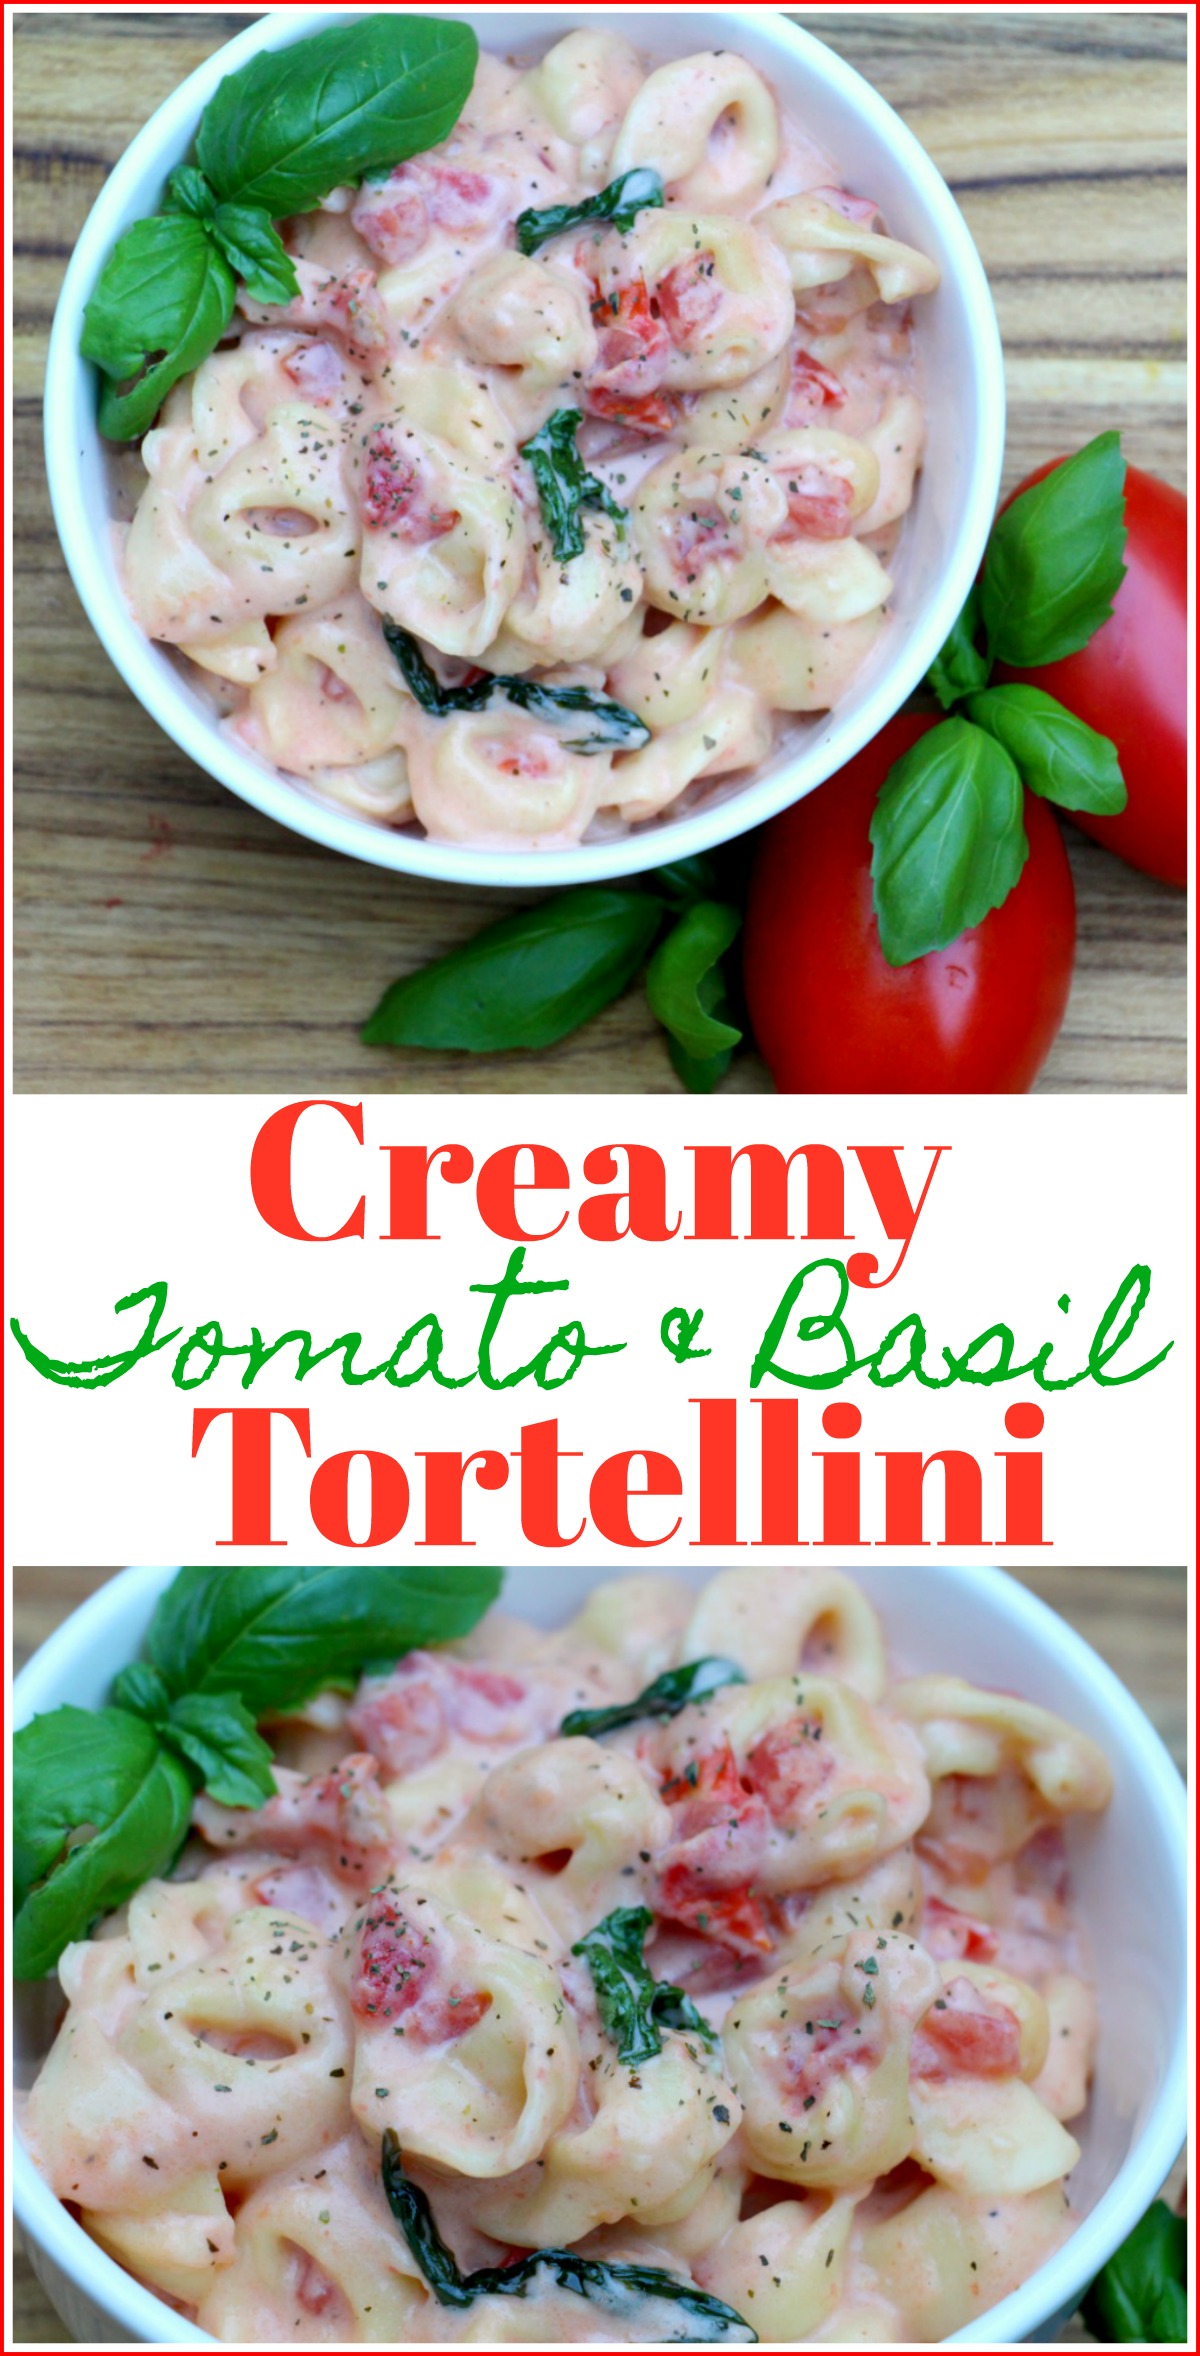 Creamy Tomato & Basil Tortellini